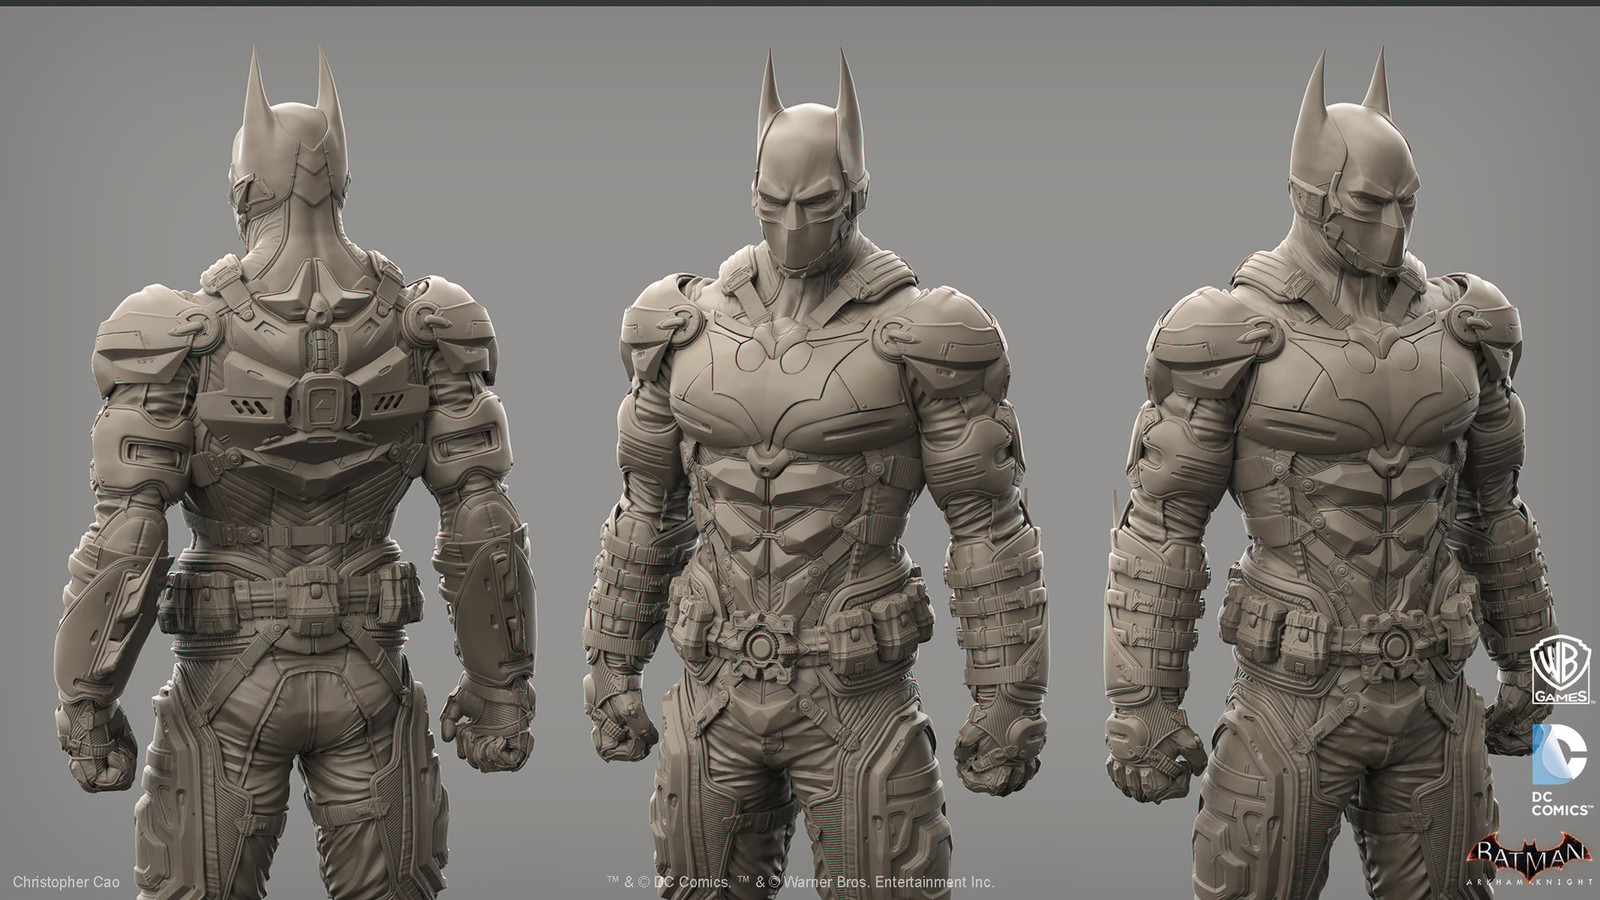 Batman: Arkham Knight Skin, Batman Beyond Game Model.